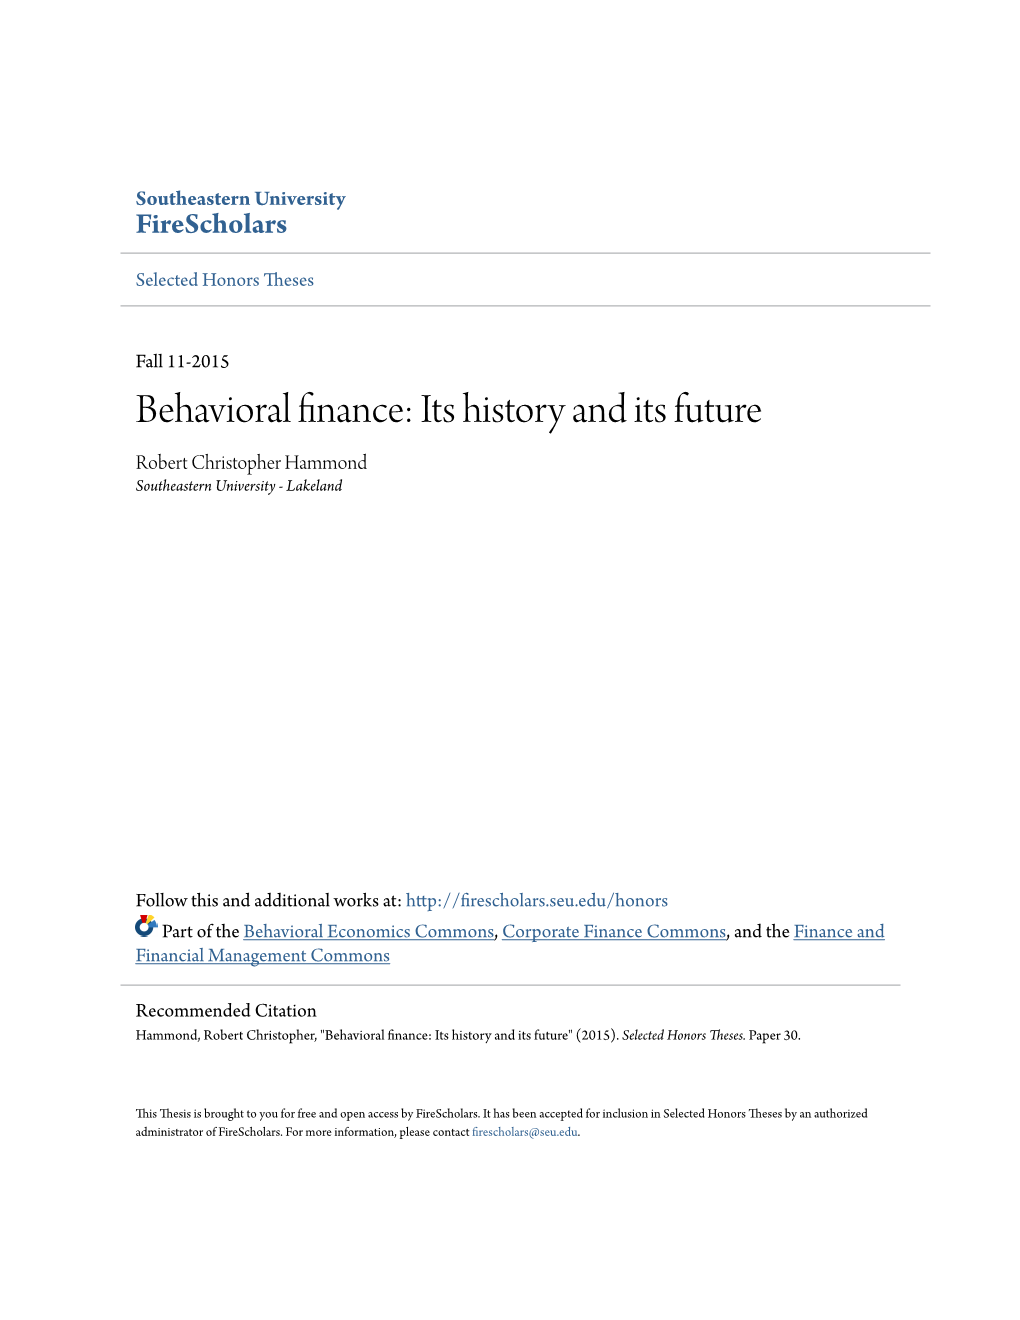 Behavioral Finance: Its History and Its Future Robert Christopher Hammond Southeastern University - Lakeland